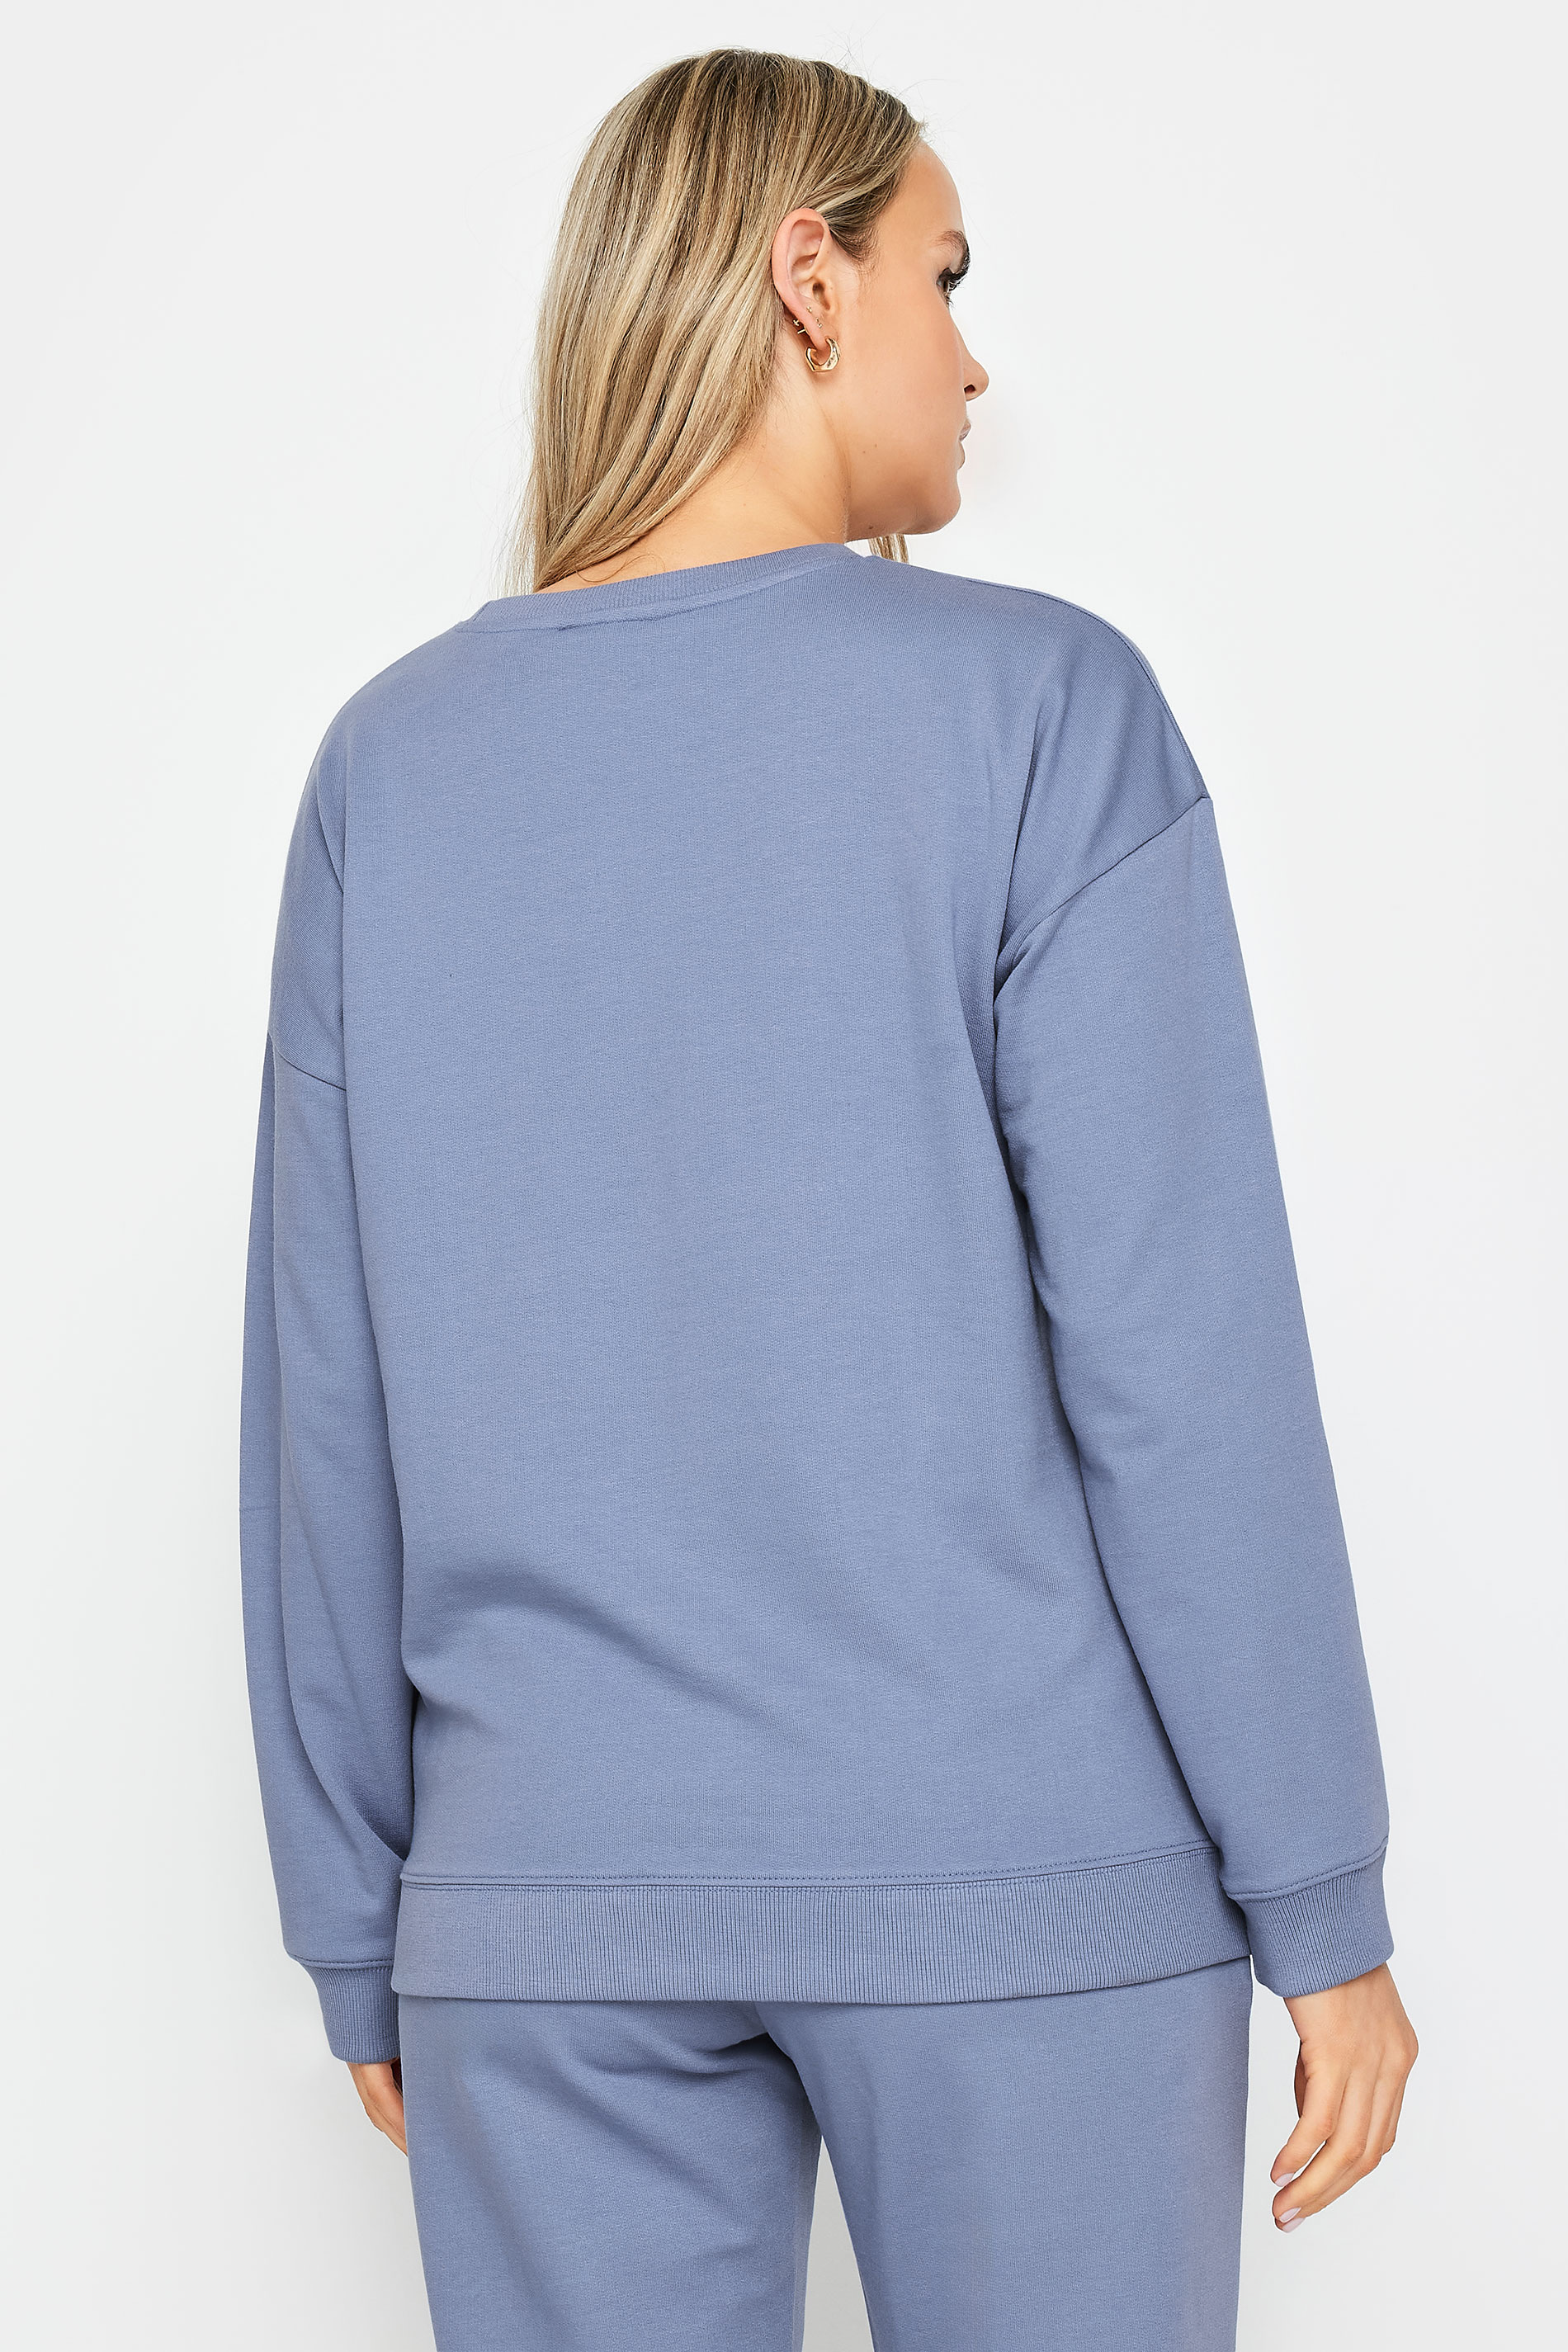 LTS Tall Women's Pale Blue Long Sleeve Sweatshirt | Long Tall Sally  3